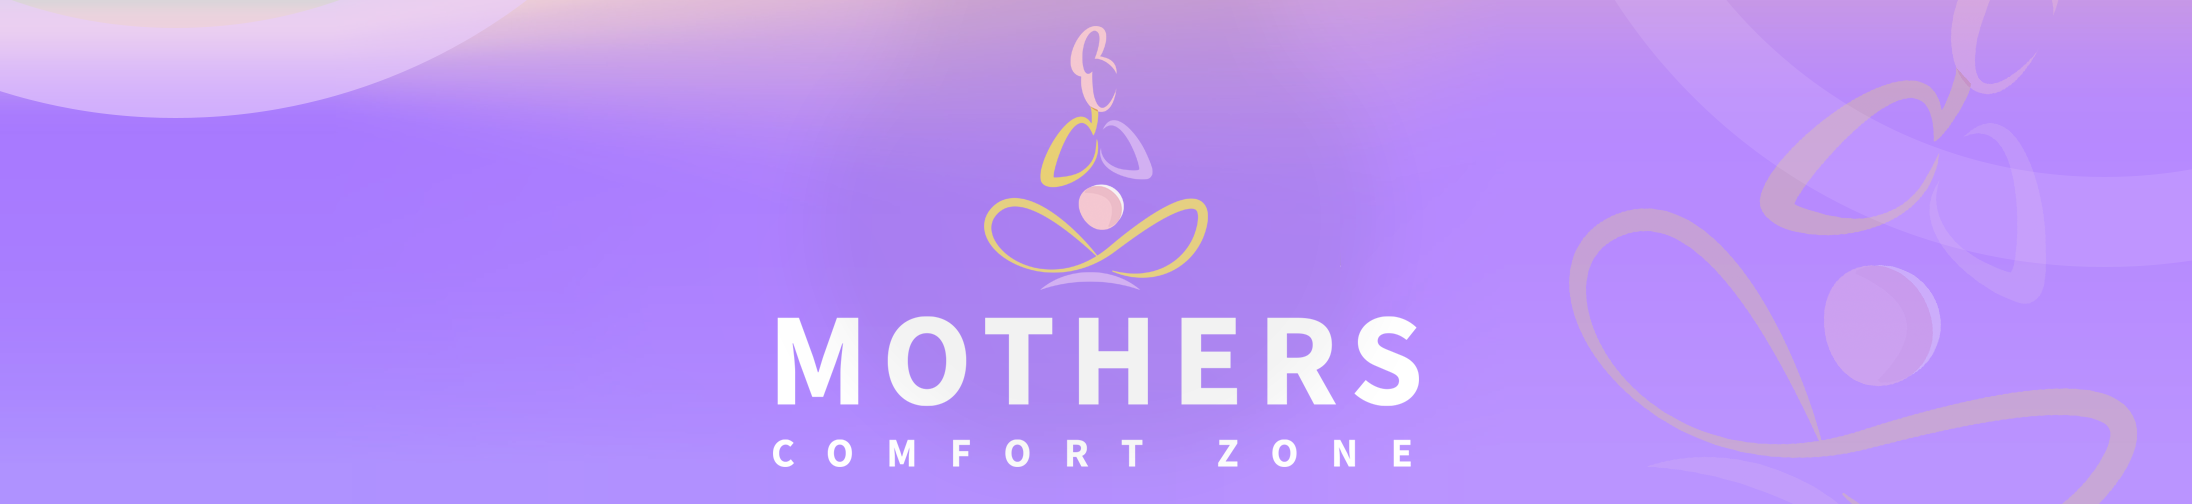 Mothers Comfort Zone